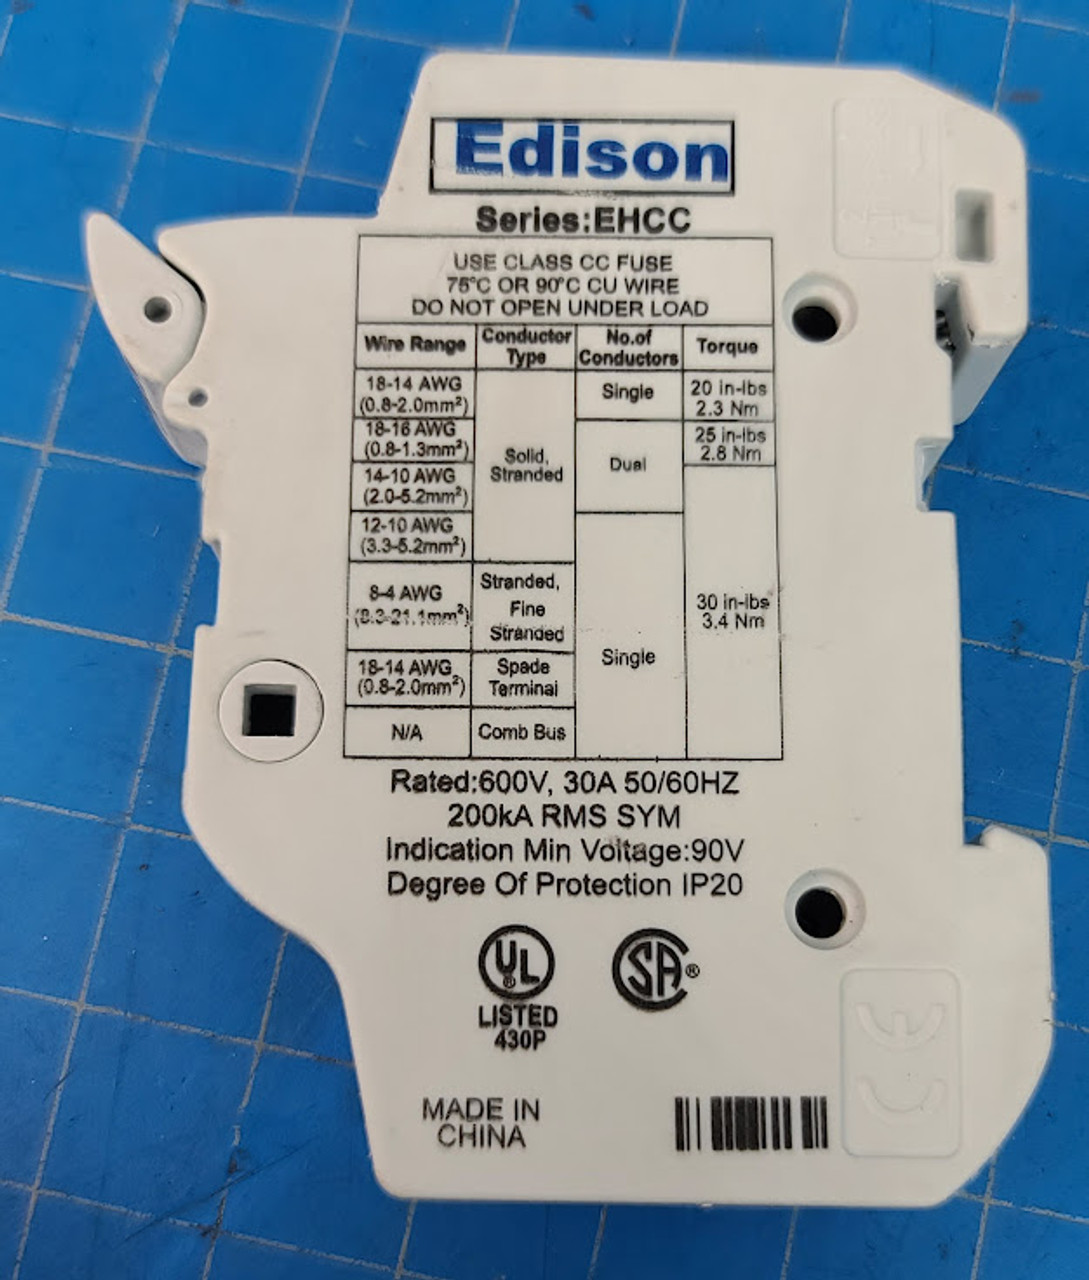 Edison Modular Fuse Holder for Class CC Fuse EHCC1DIU